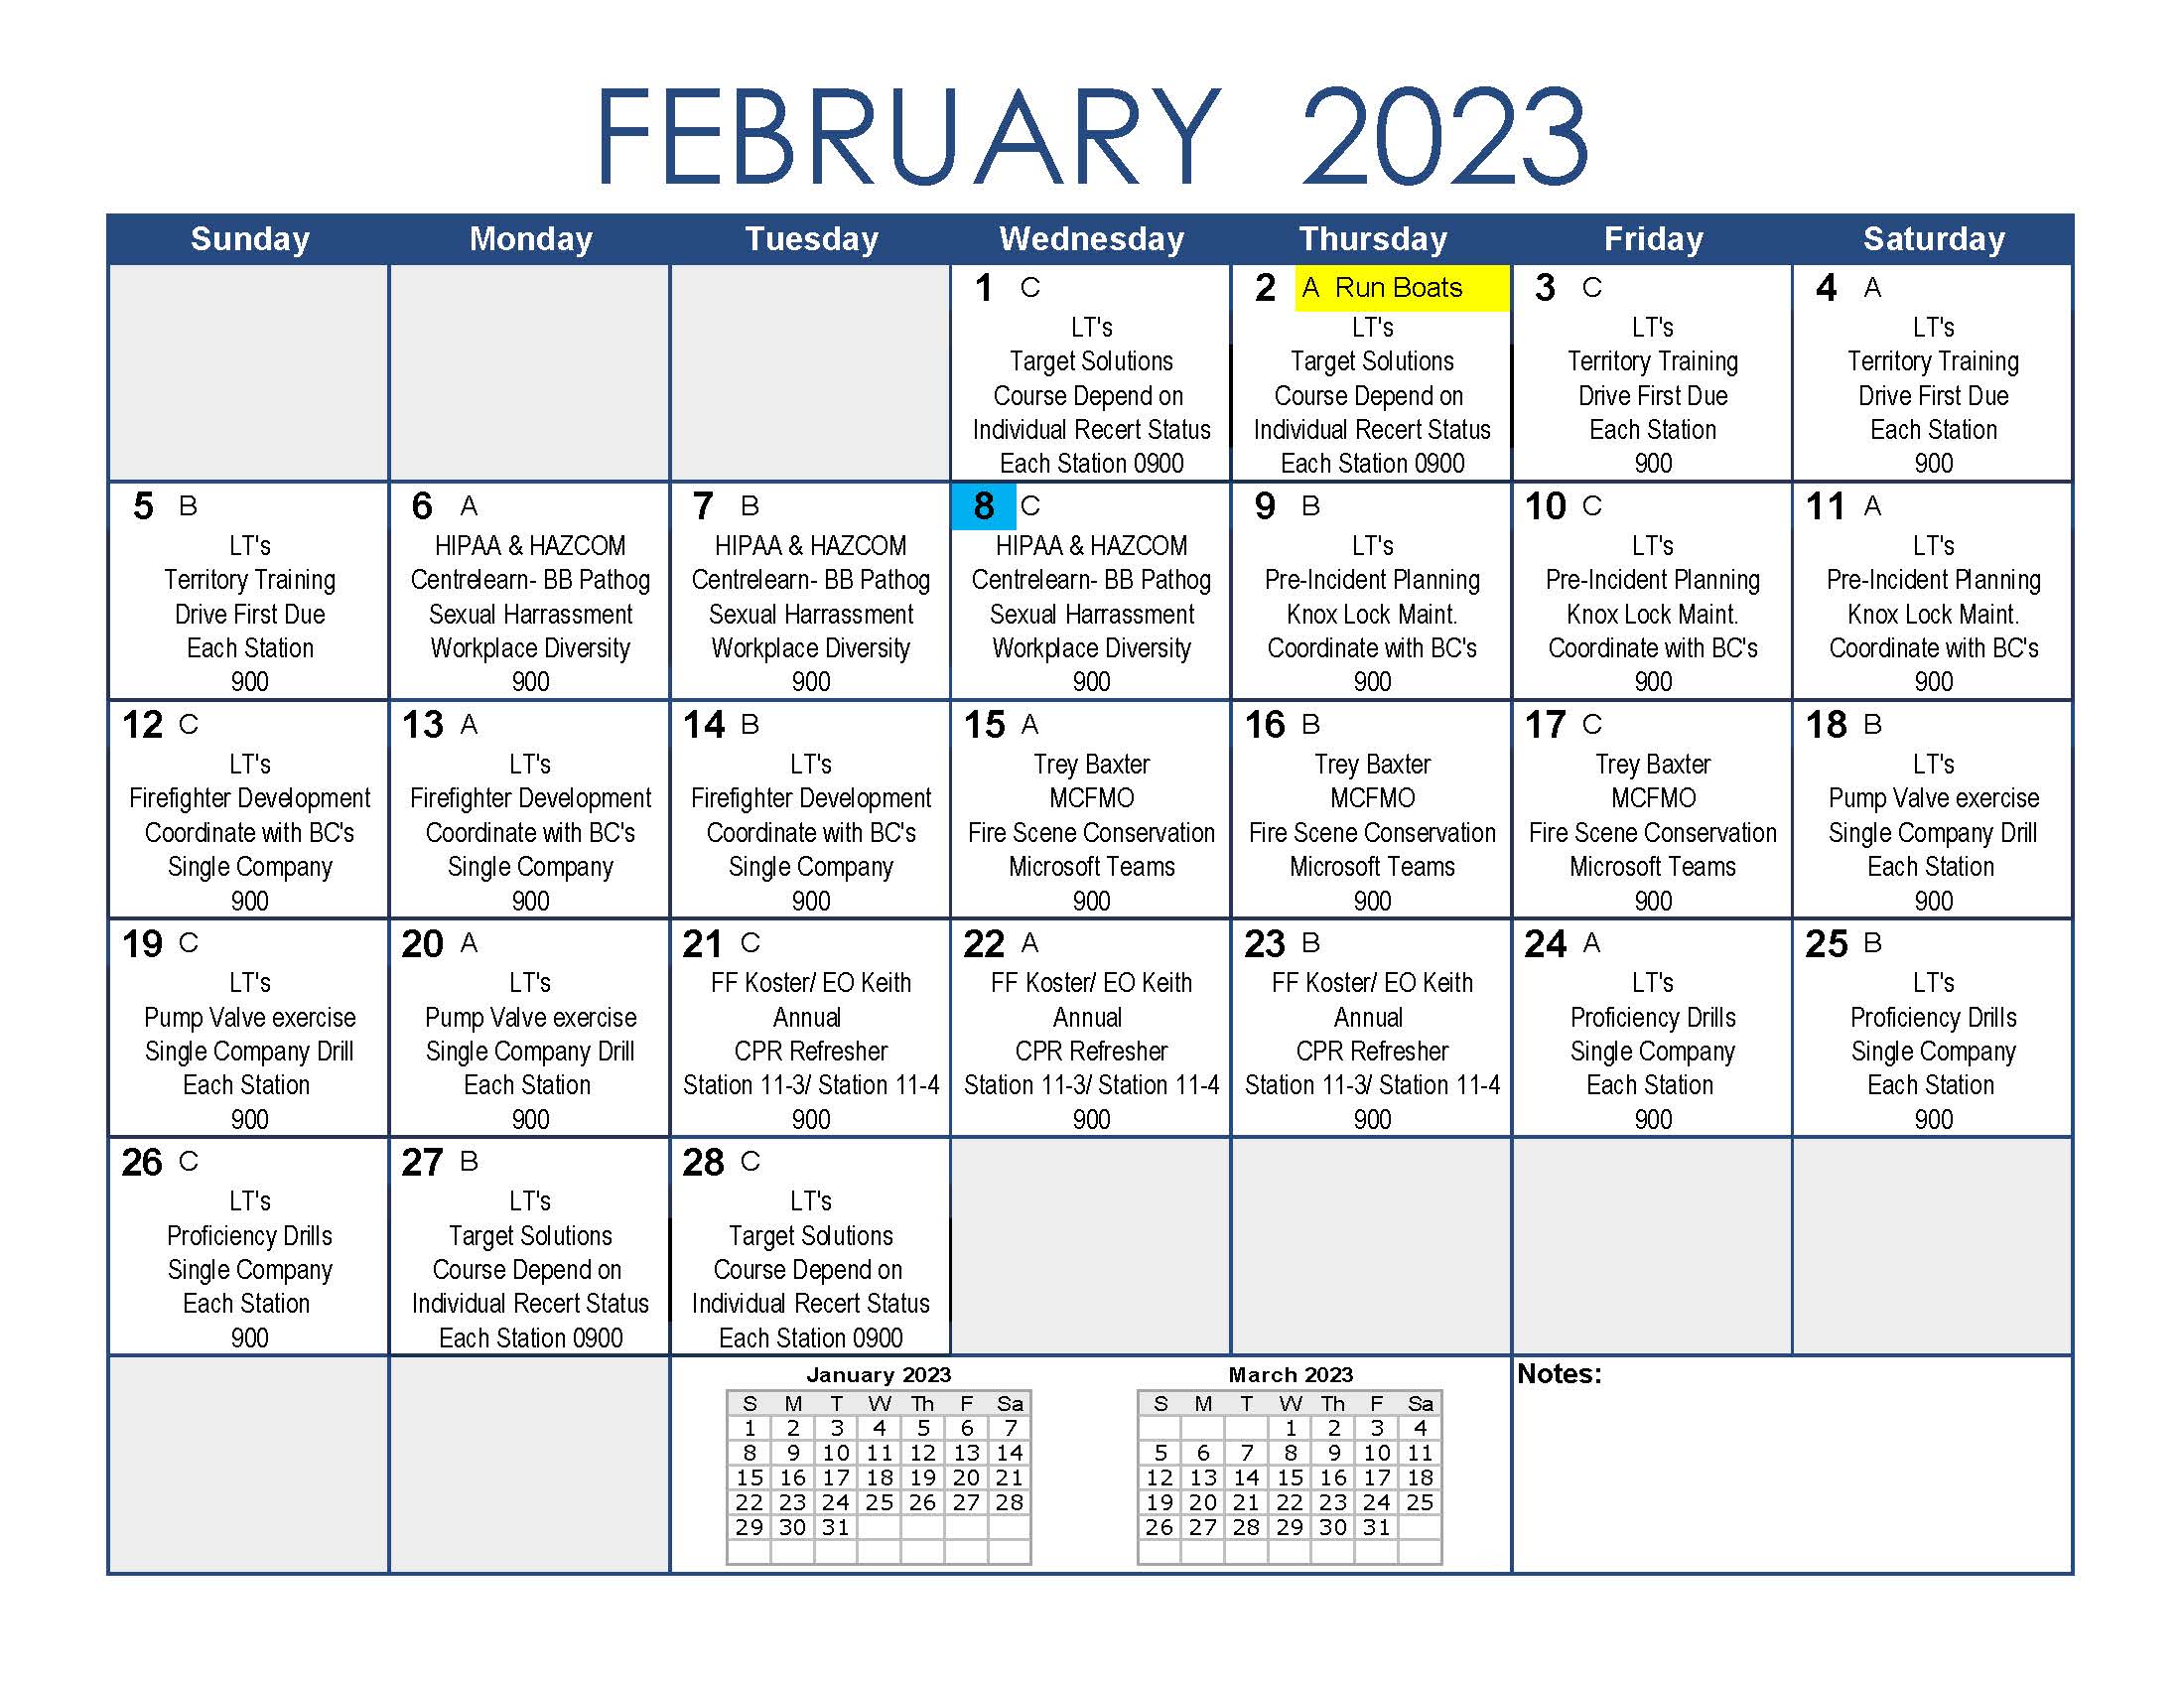 February Training calendar